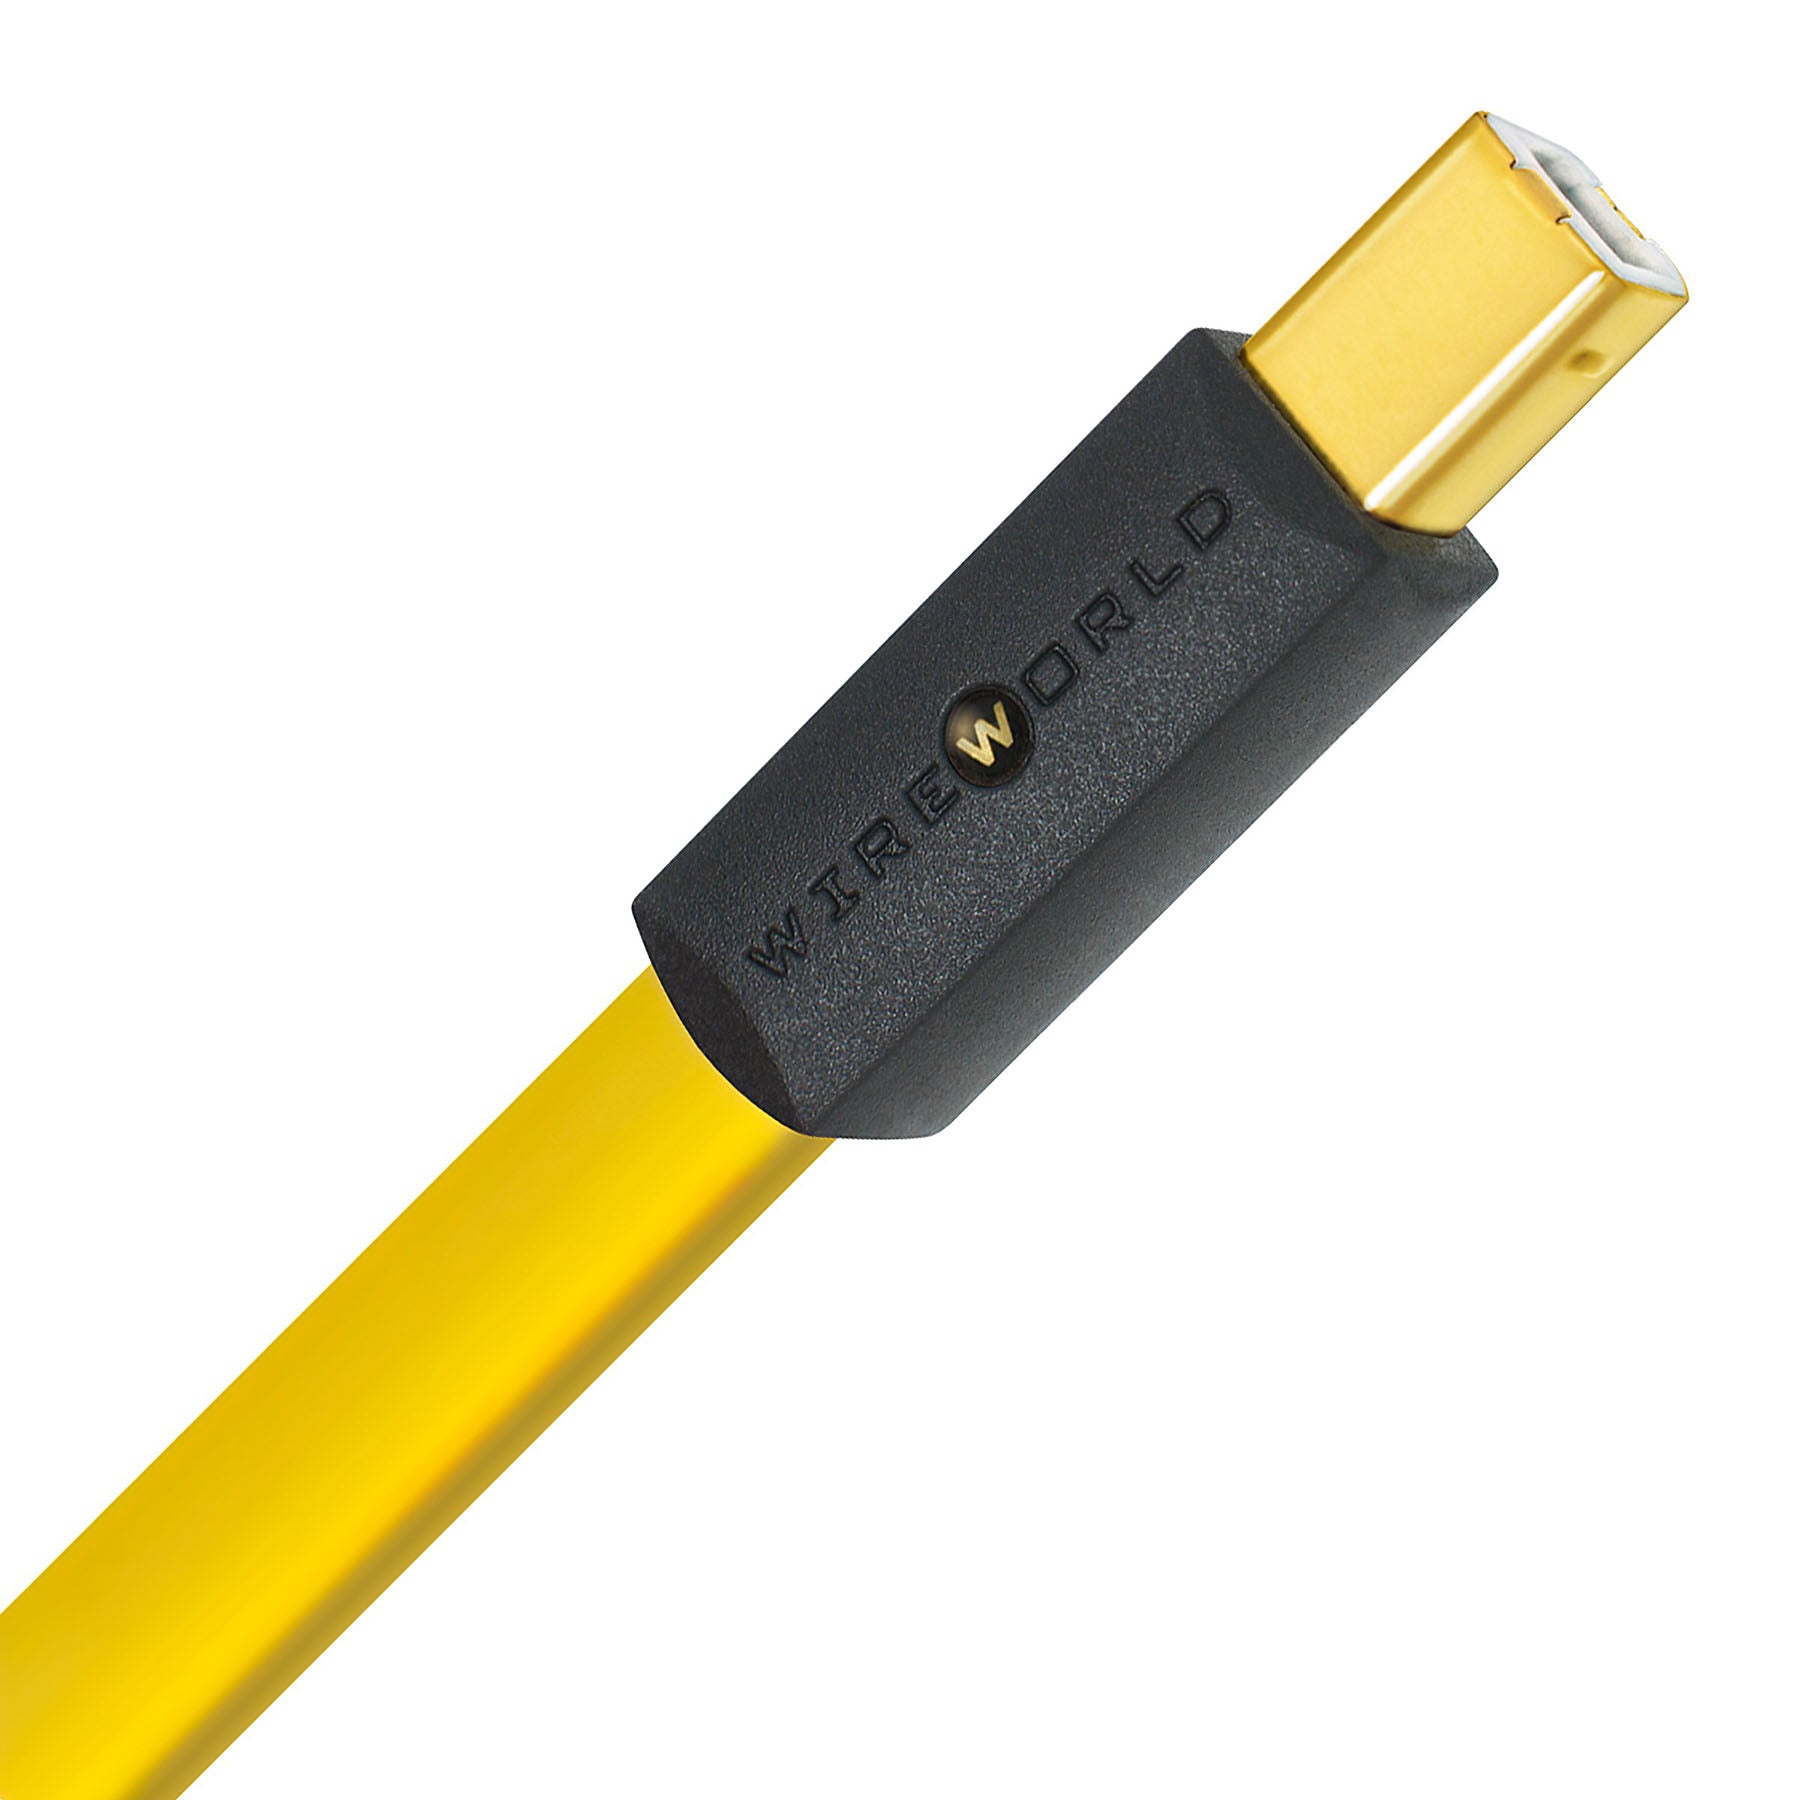 Wireworld Chroma 8 USB 2.0 Audio Cables